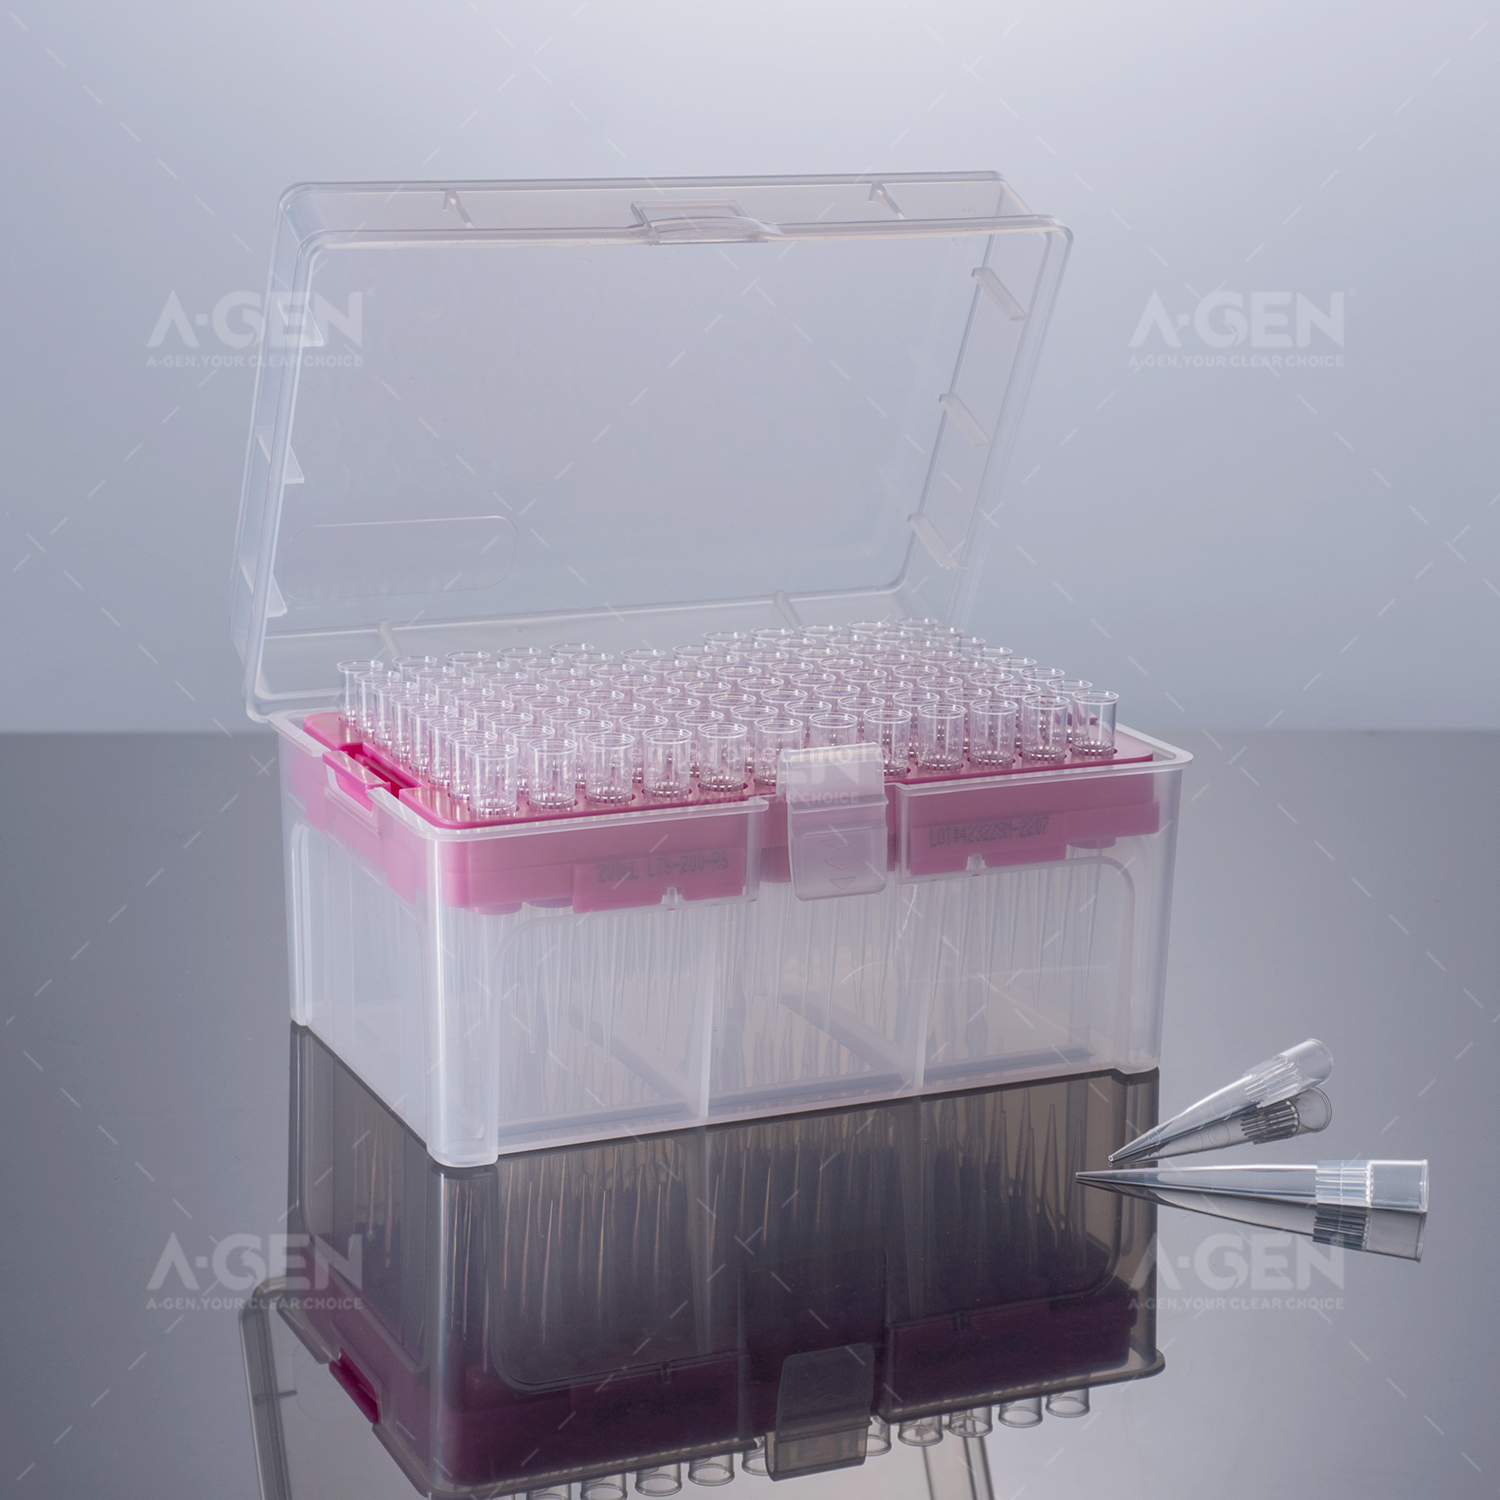 Rainin Sterilization 200uL transparent pipette tips packed in Rack 